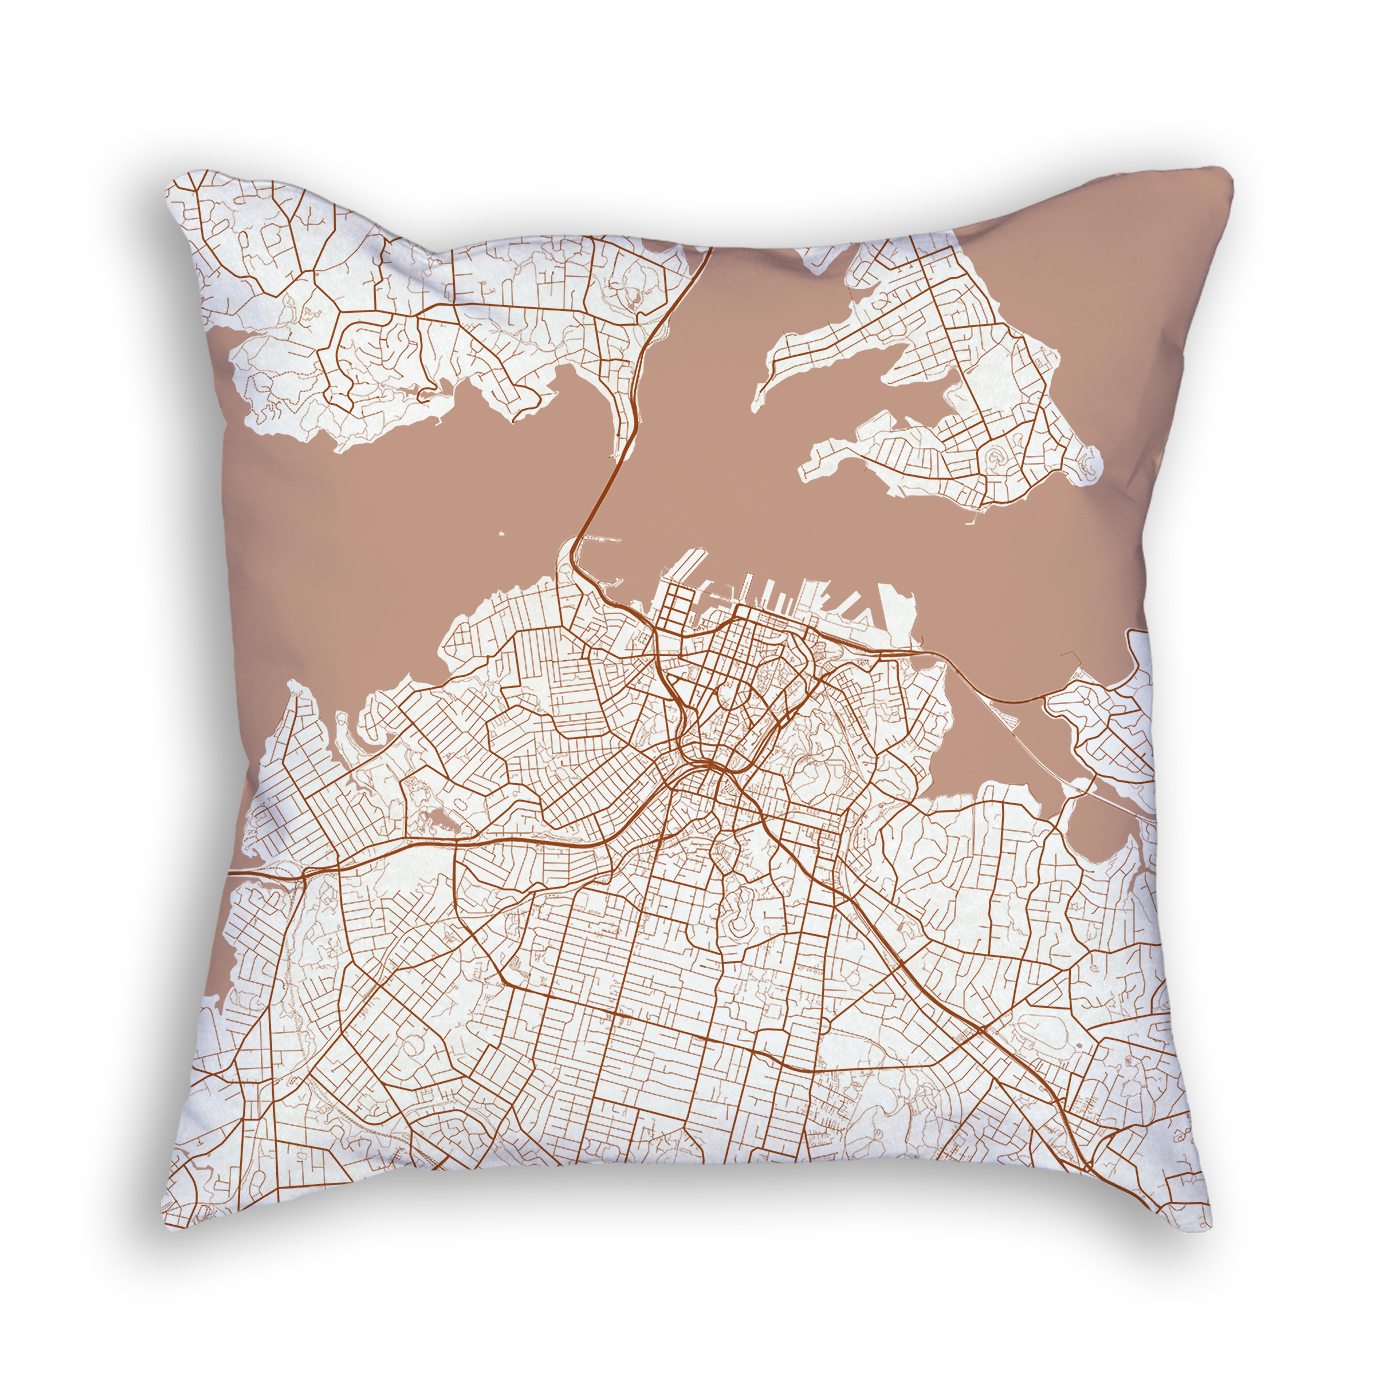 Auckland New Zealand City Map Art Decorative Throw Pillow